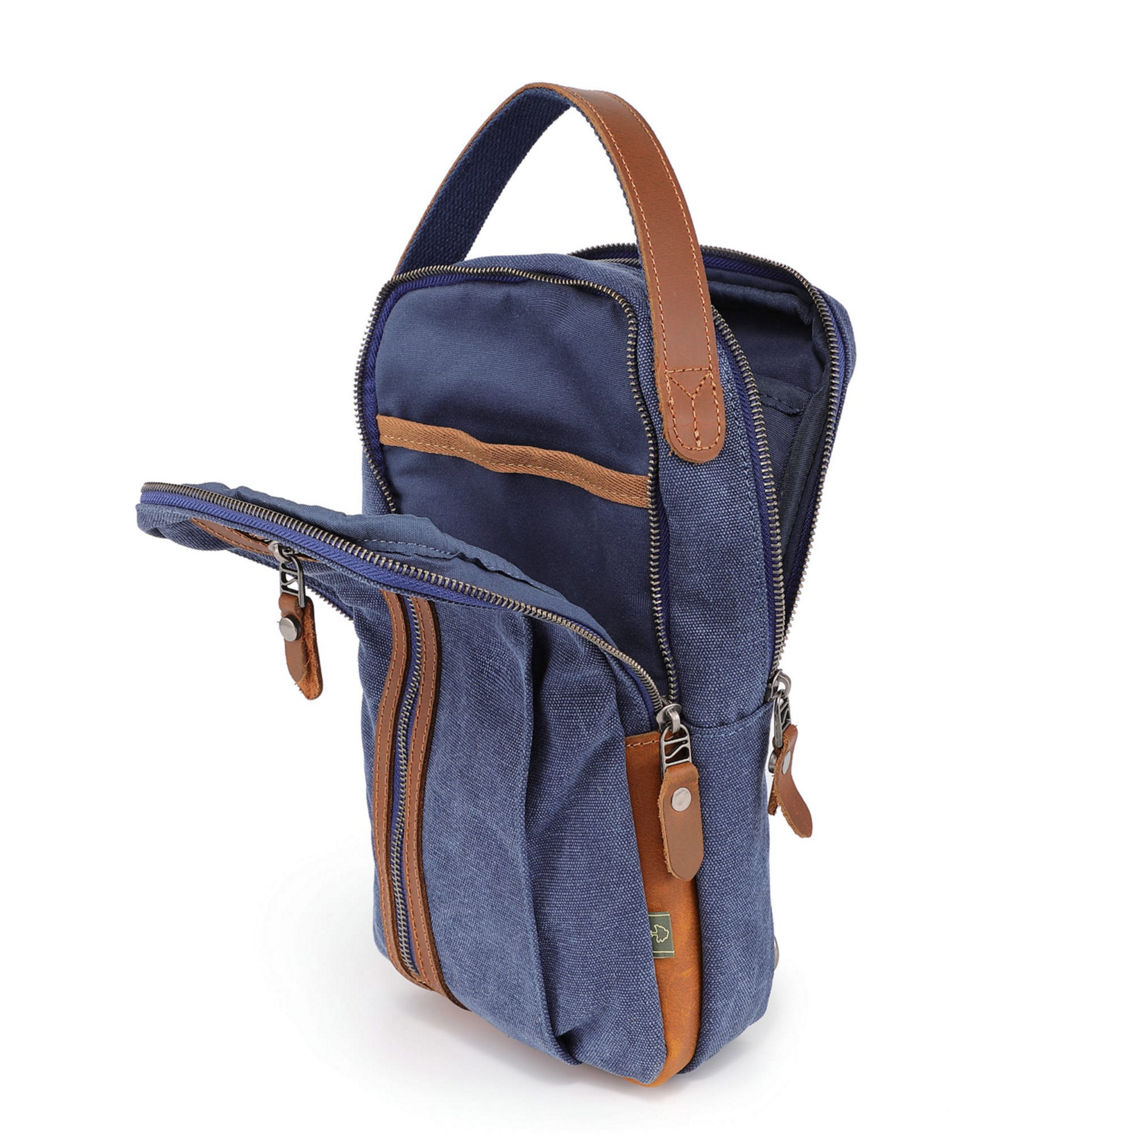 TSD Brand Madrone Sling Bag - Image 4 of 5